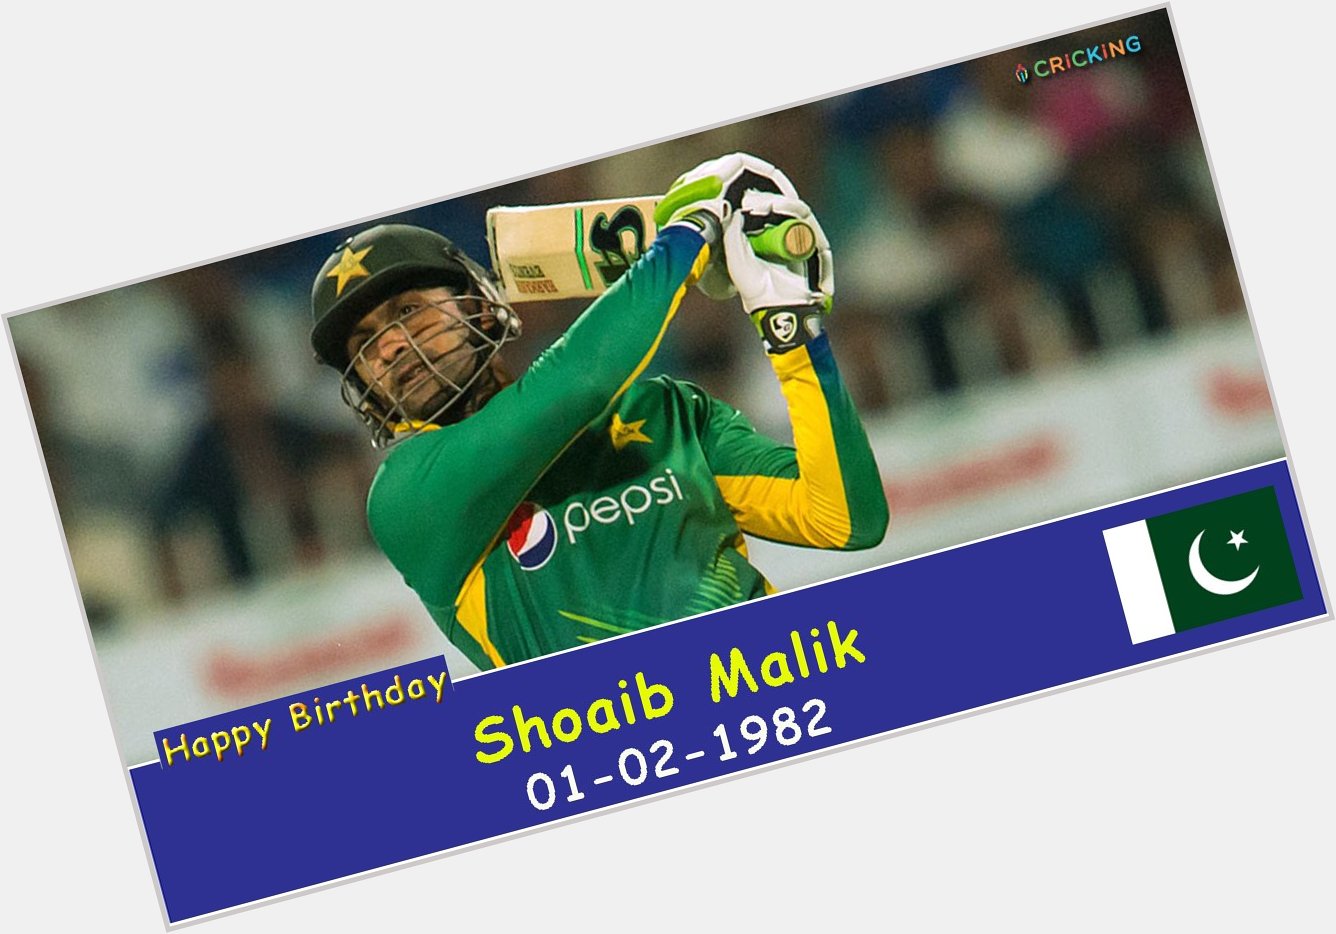 Happy Birthday Shoaib Malik. The Pakistani cricketer turns 35 today. 